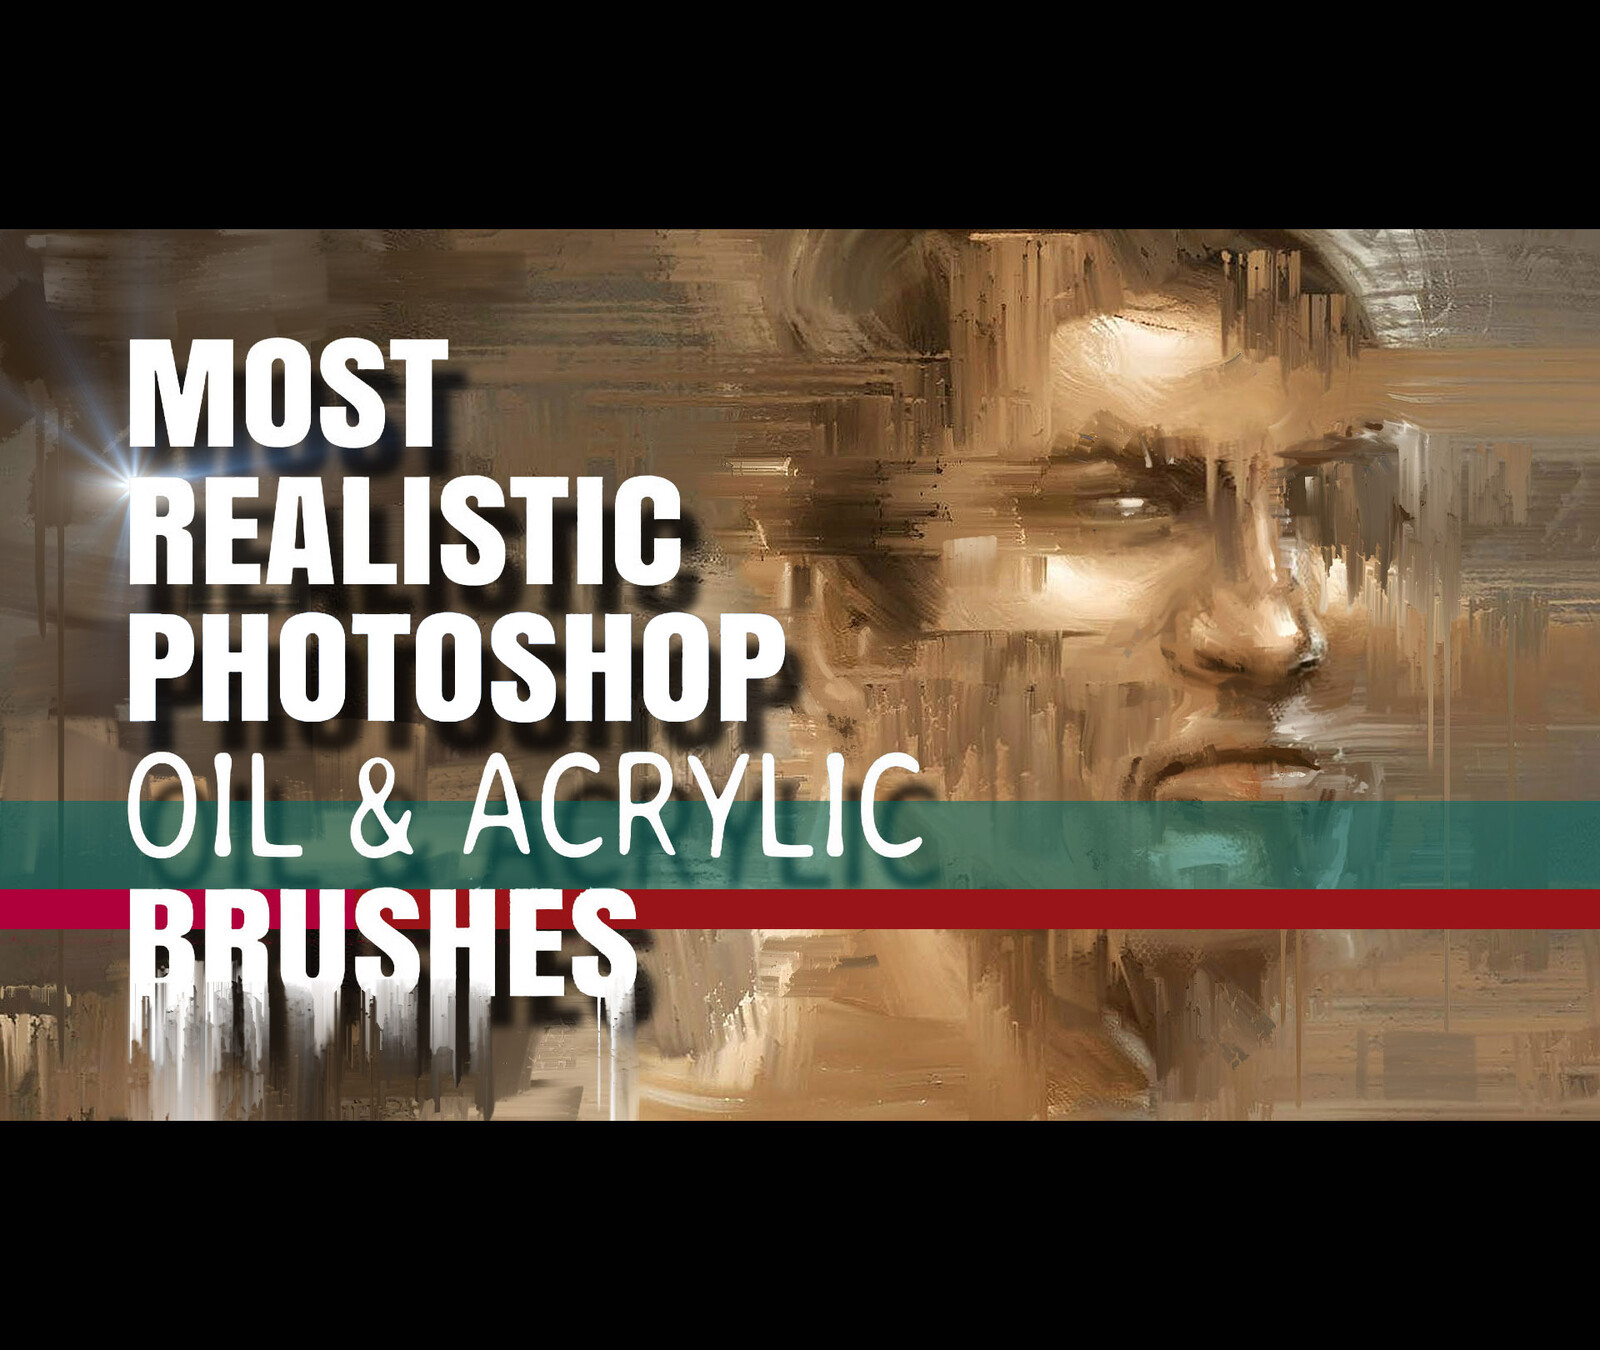 ArtStation Store START! &gt;&gt; Photoshop MA-BRUSHES - Realistic Photoshop Oil &amp; Acrylic Painting Brushes